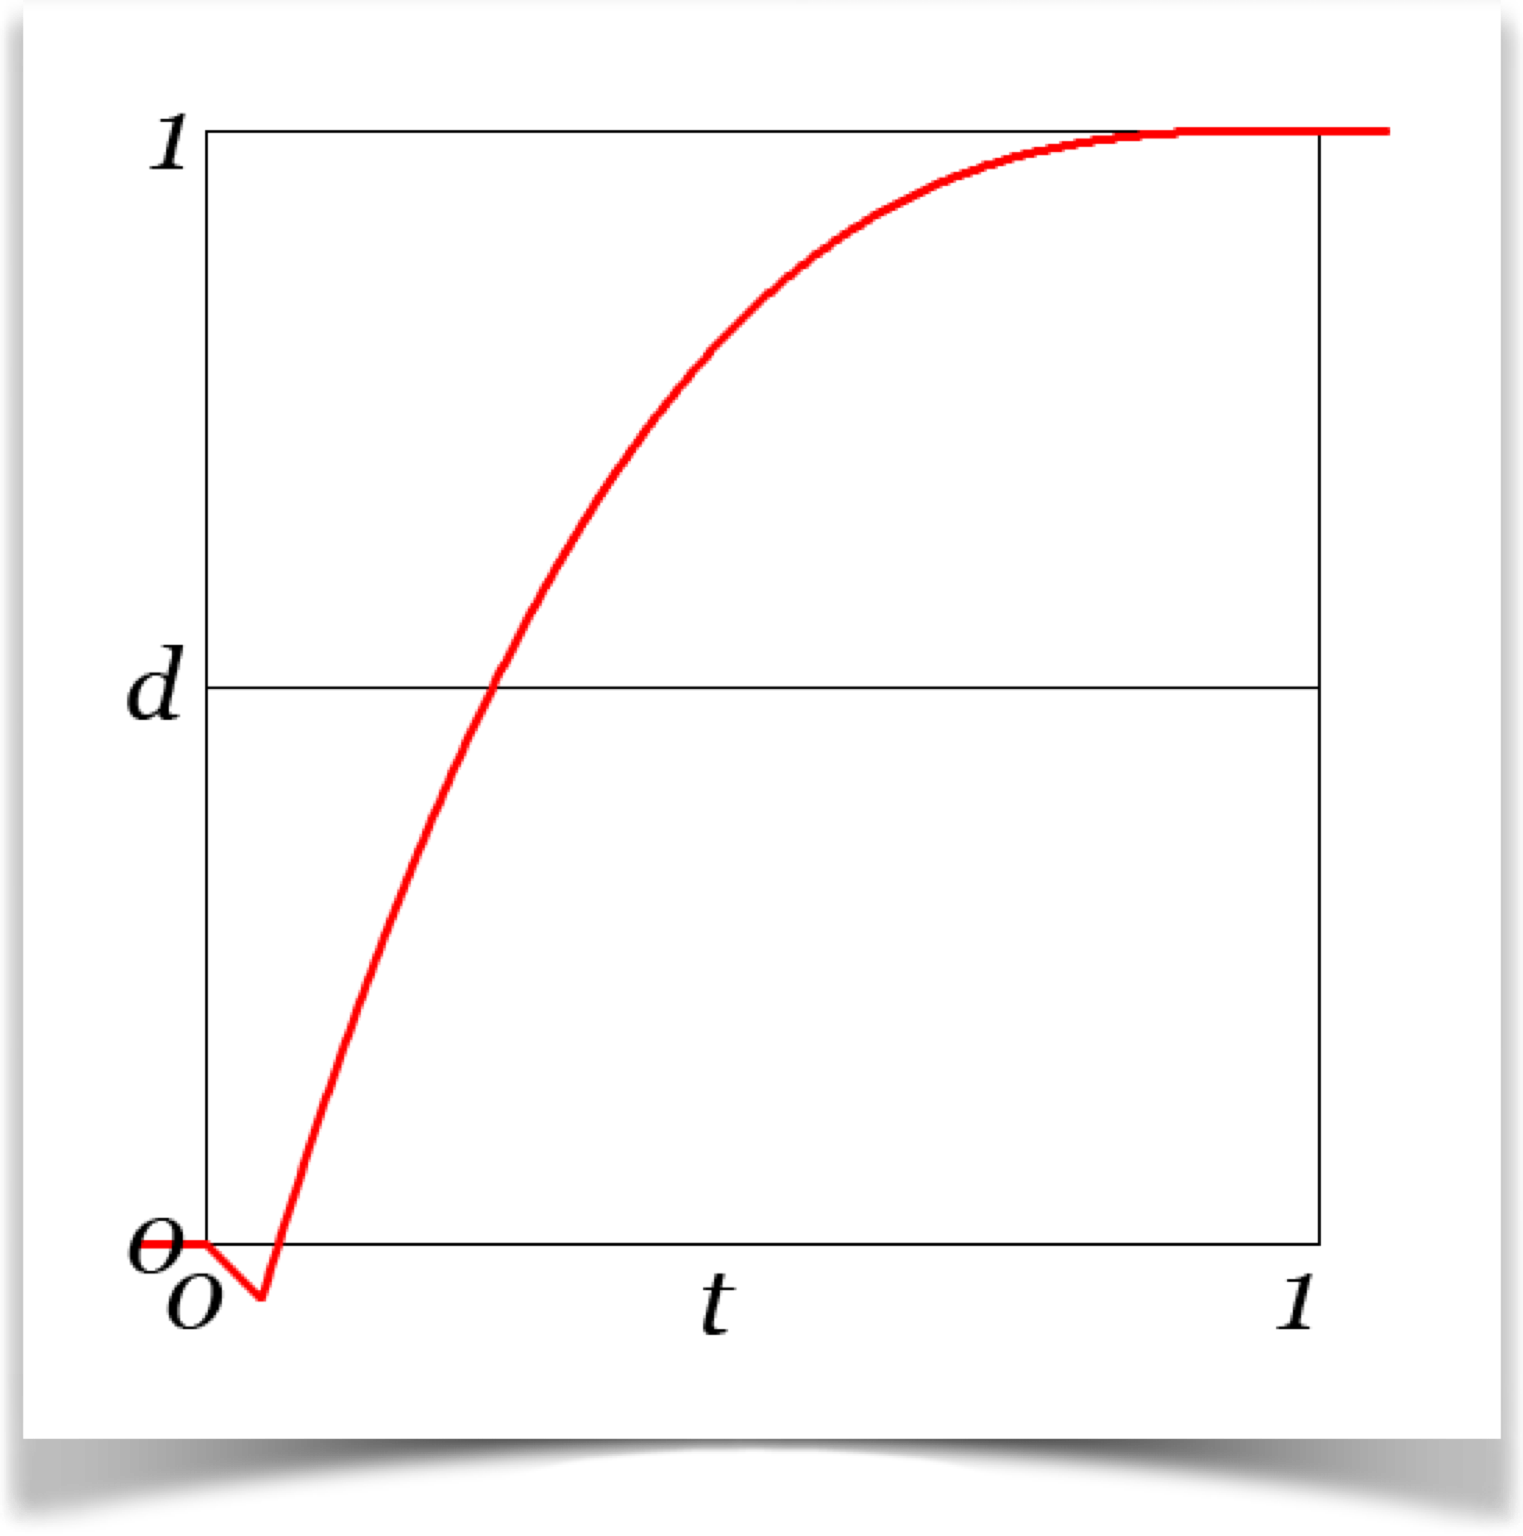 A short anticipation followed by a cubic curve